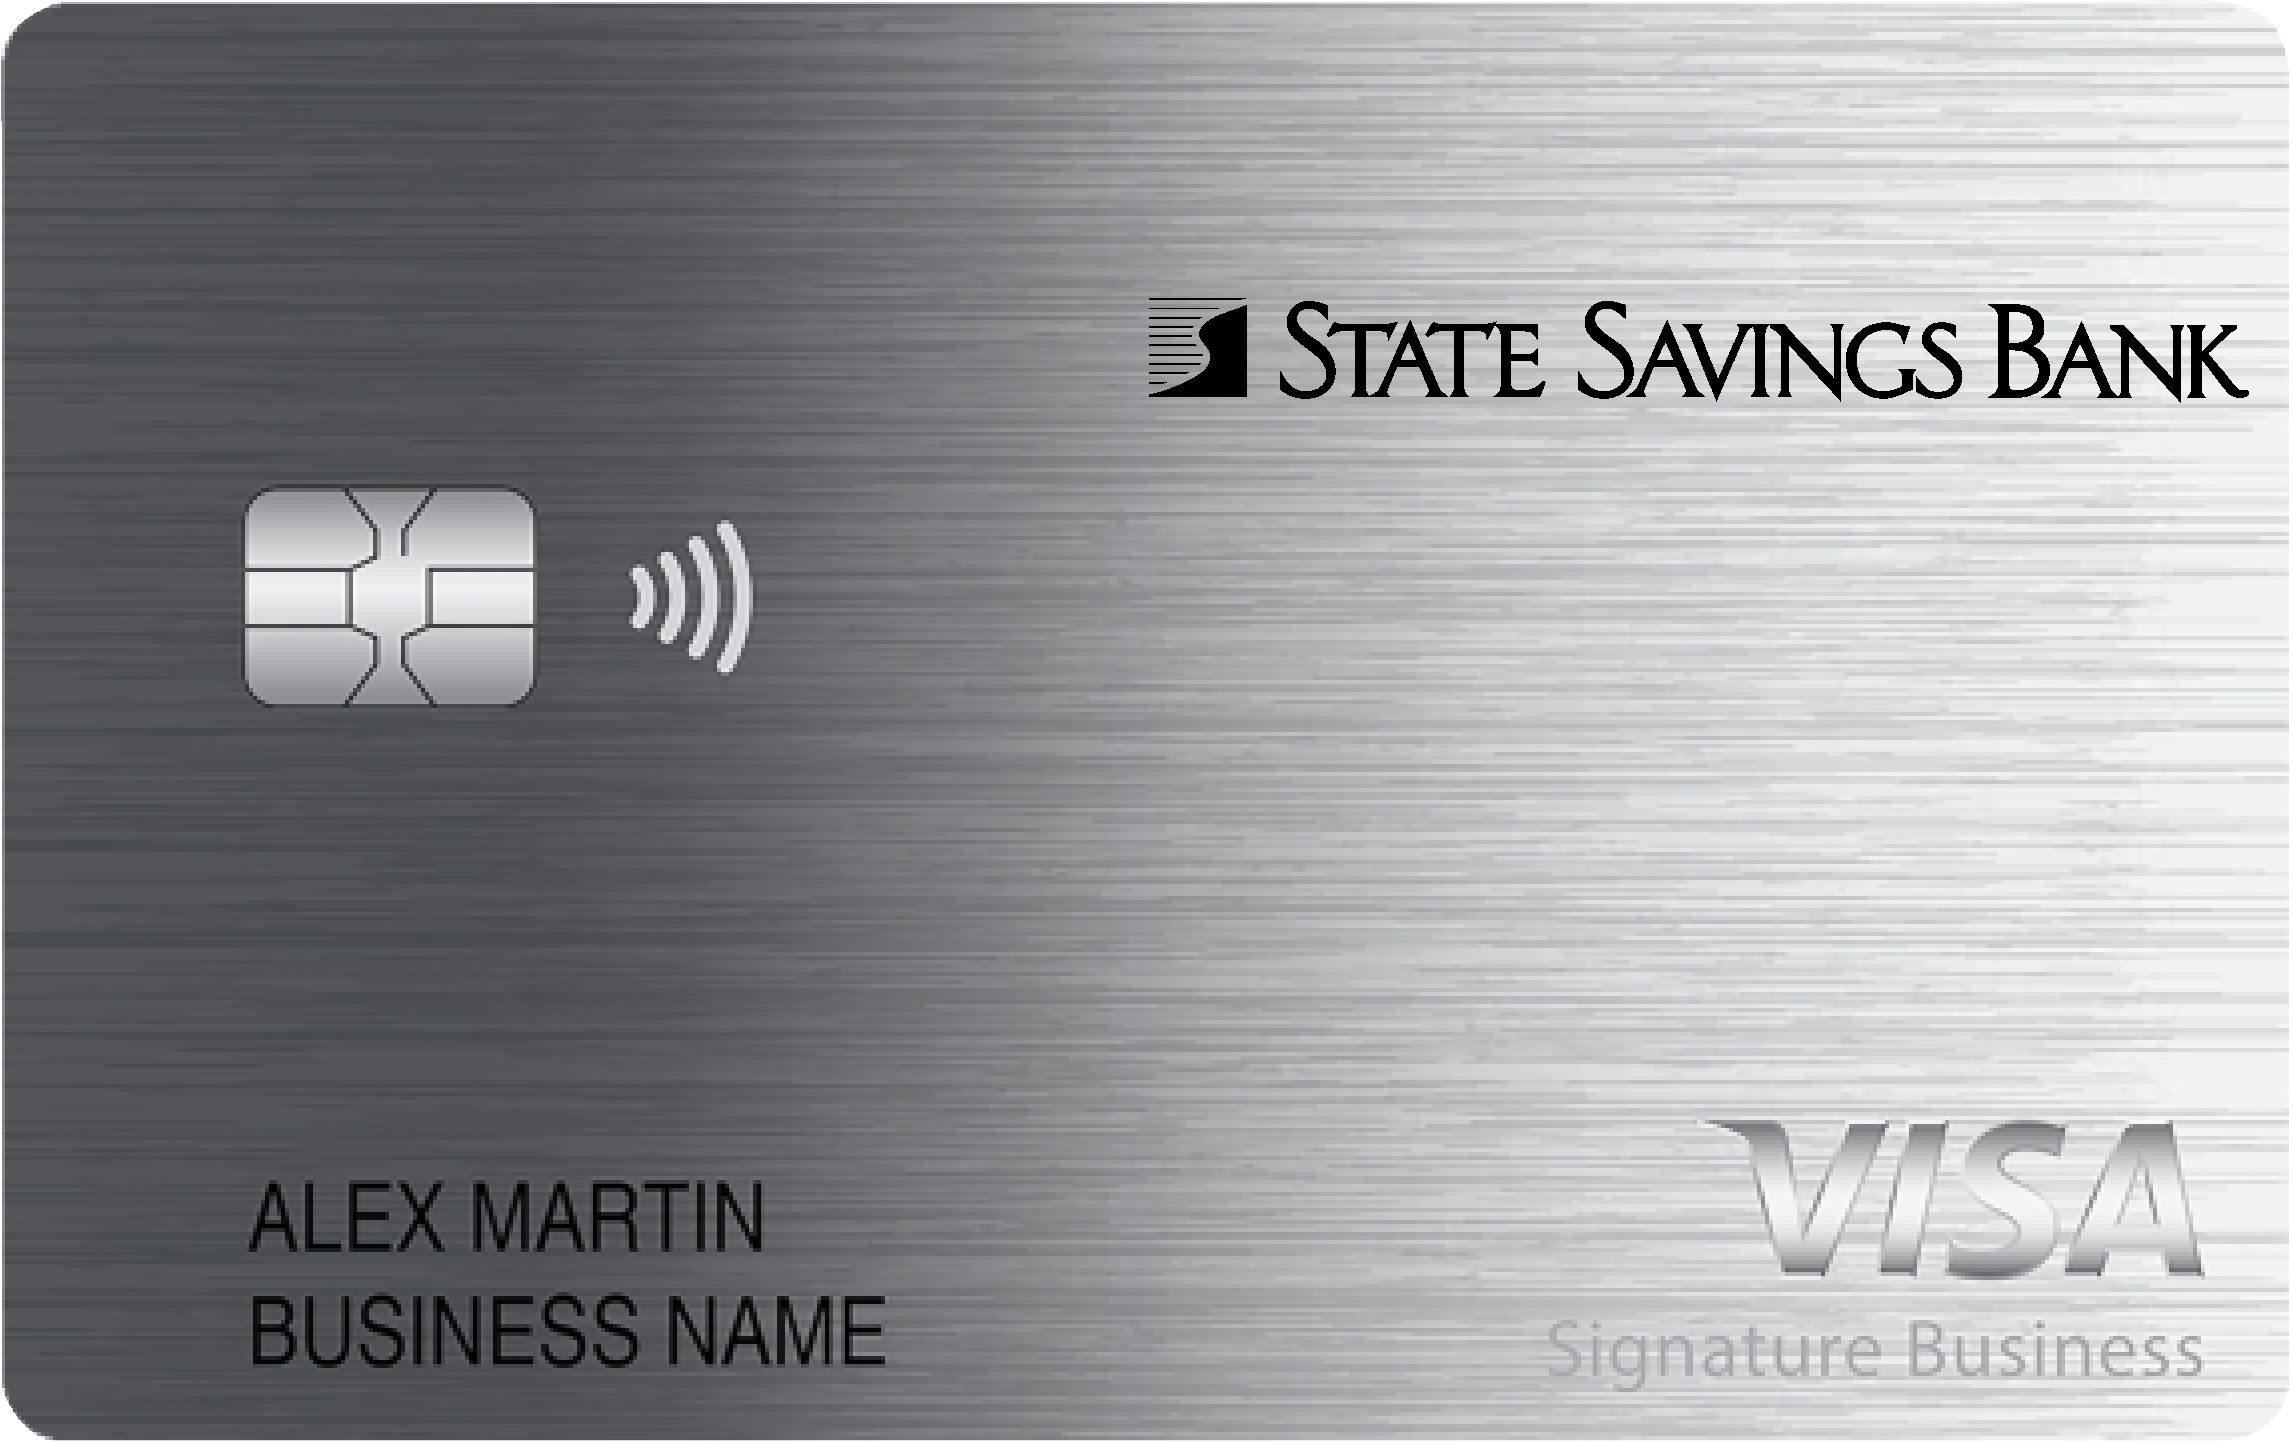 State Savings Bank Smart Business Rewards Card